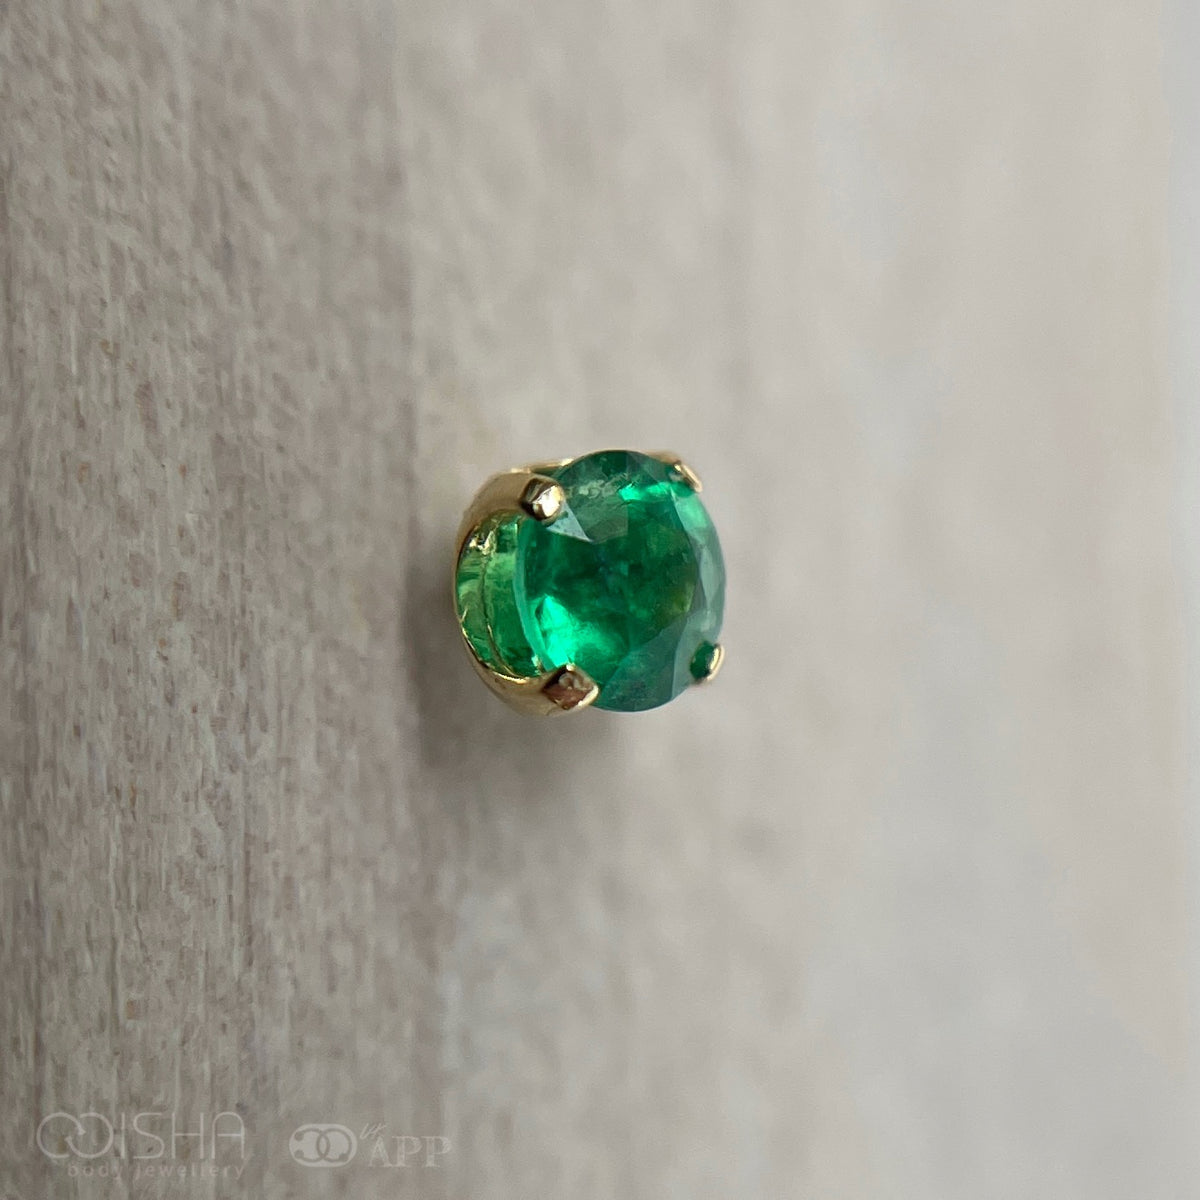 NeoMetal 18ct Gold Prong Set Genuine Emerald End THREADLESS